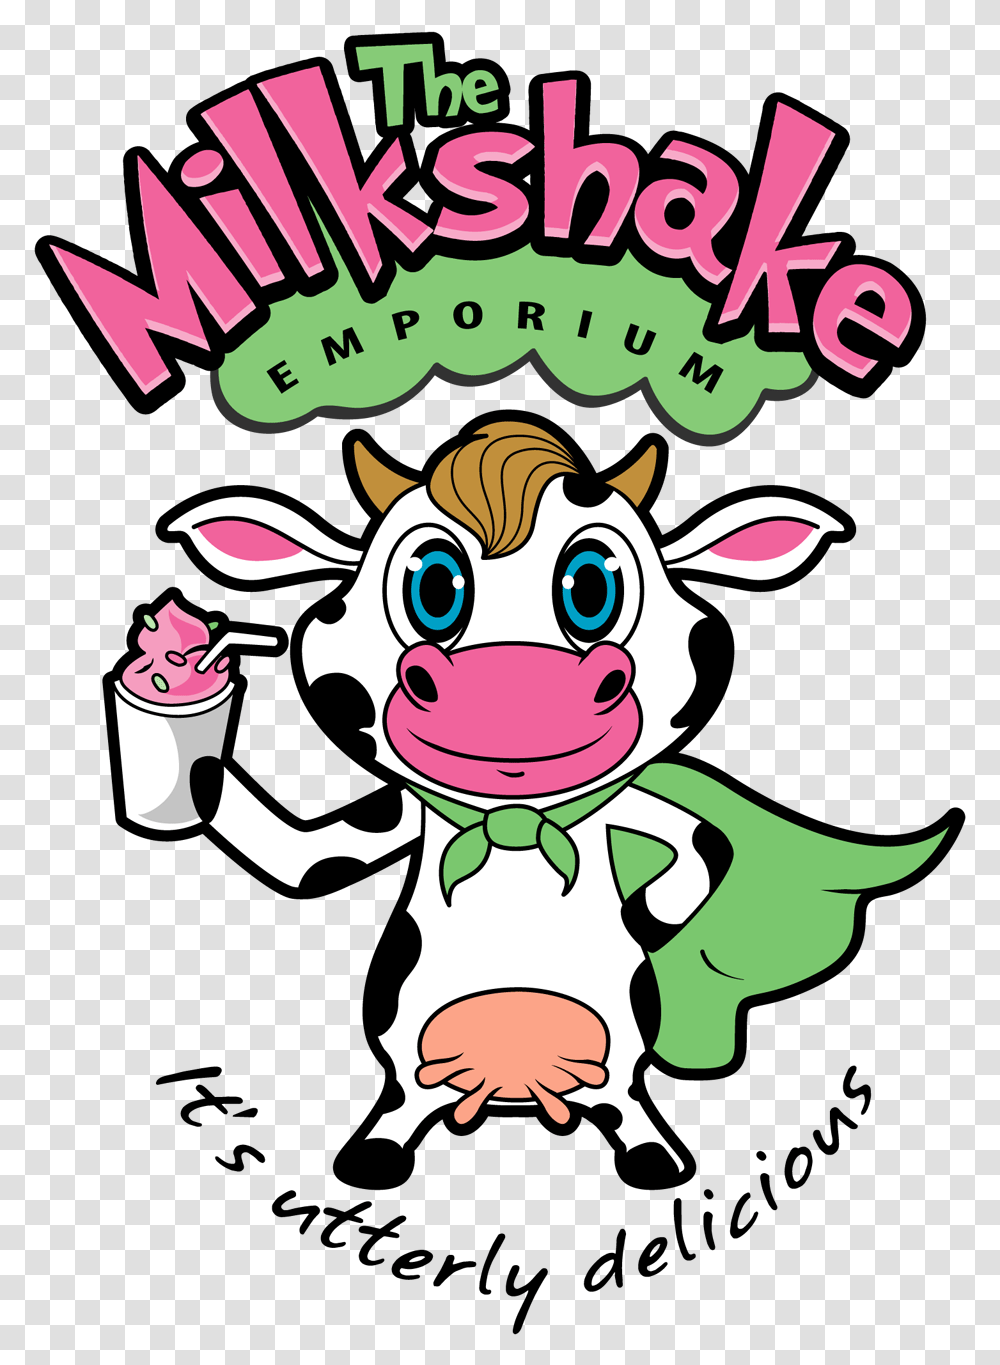 Cartoon The Logo Company Cartoon Logo Logo Design Milkshake Emporium, Poster, Advertisement, Animal, Cow Transparent Png